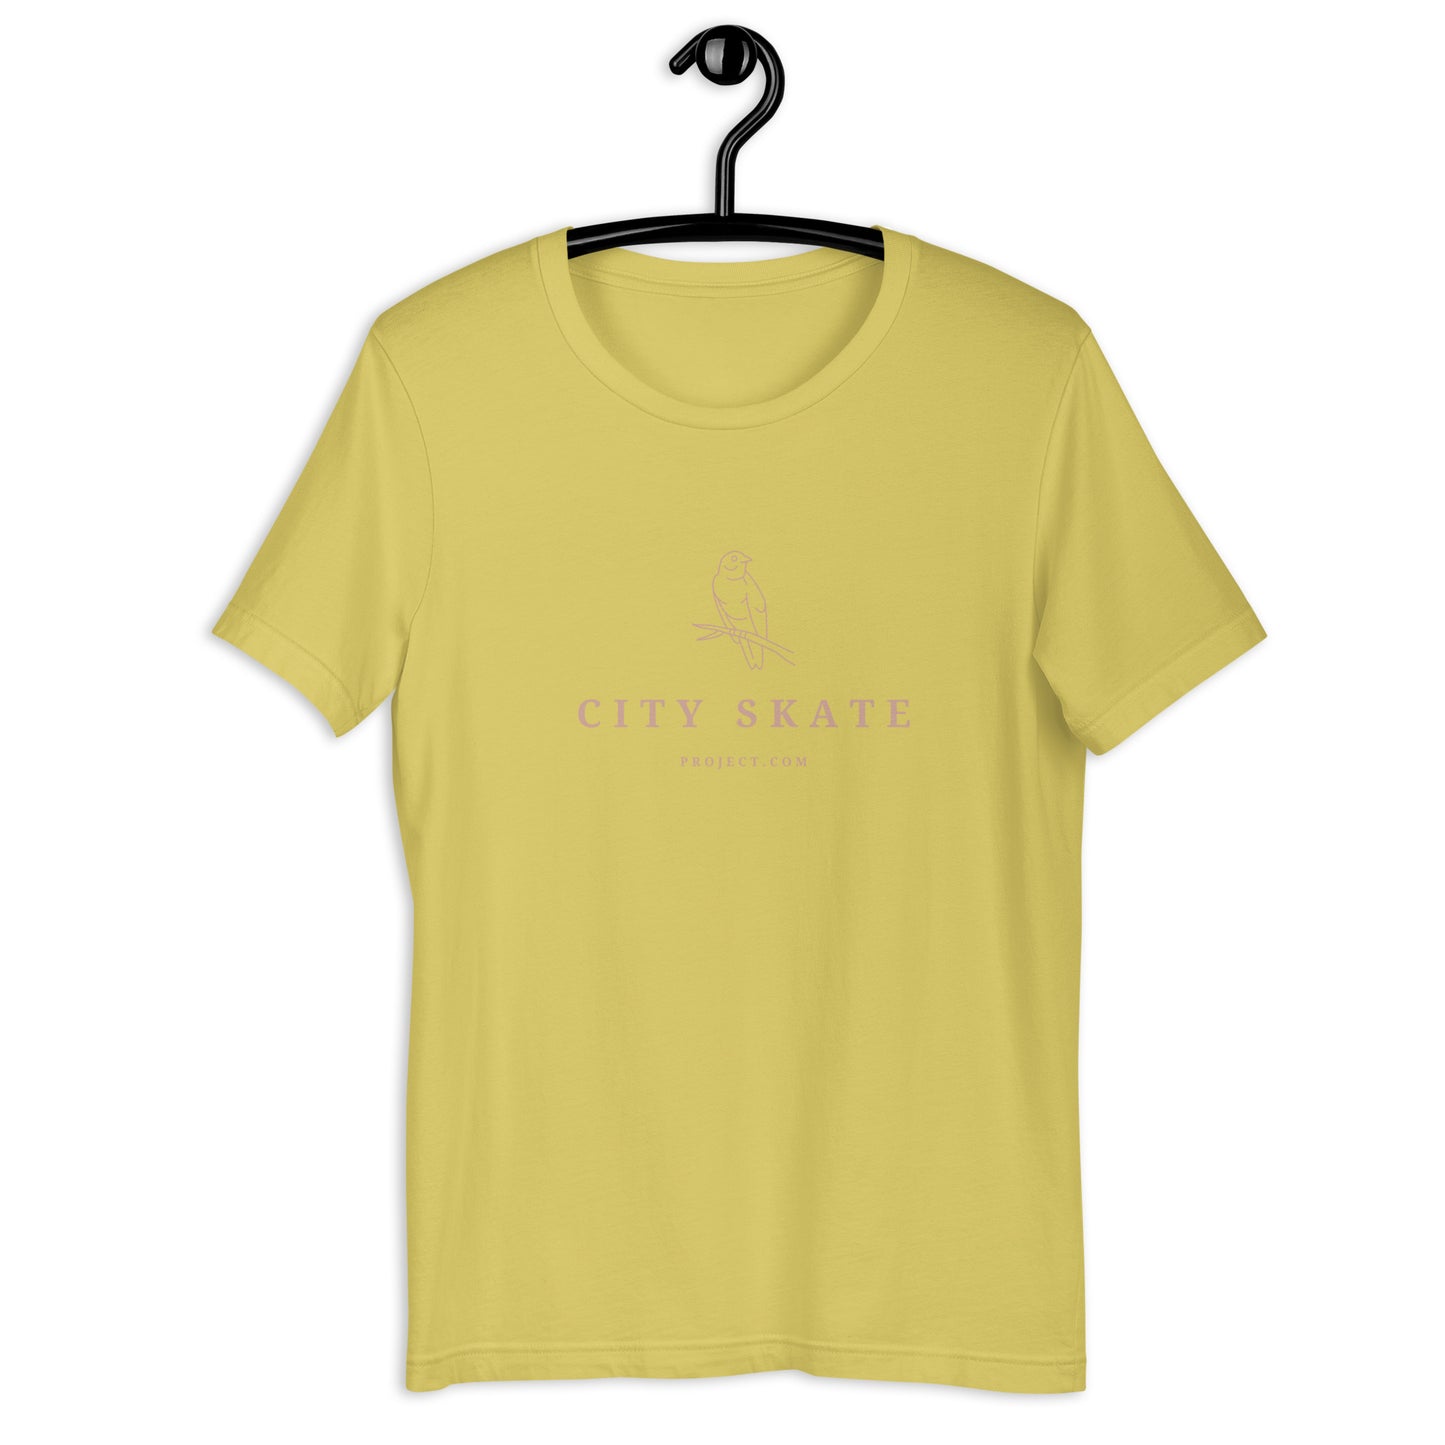 City Skate Project Strange Bird #2 Unisex t-shirt